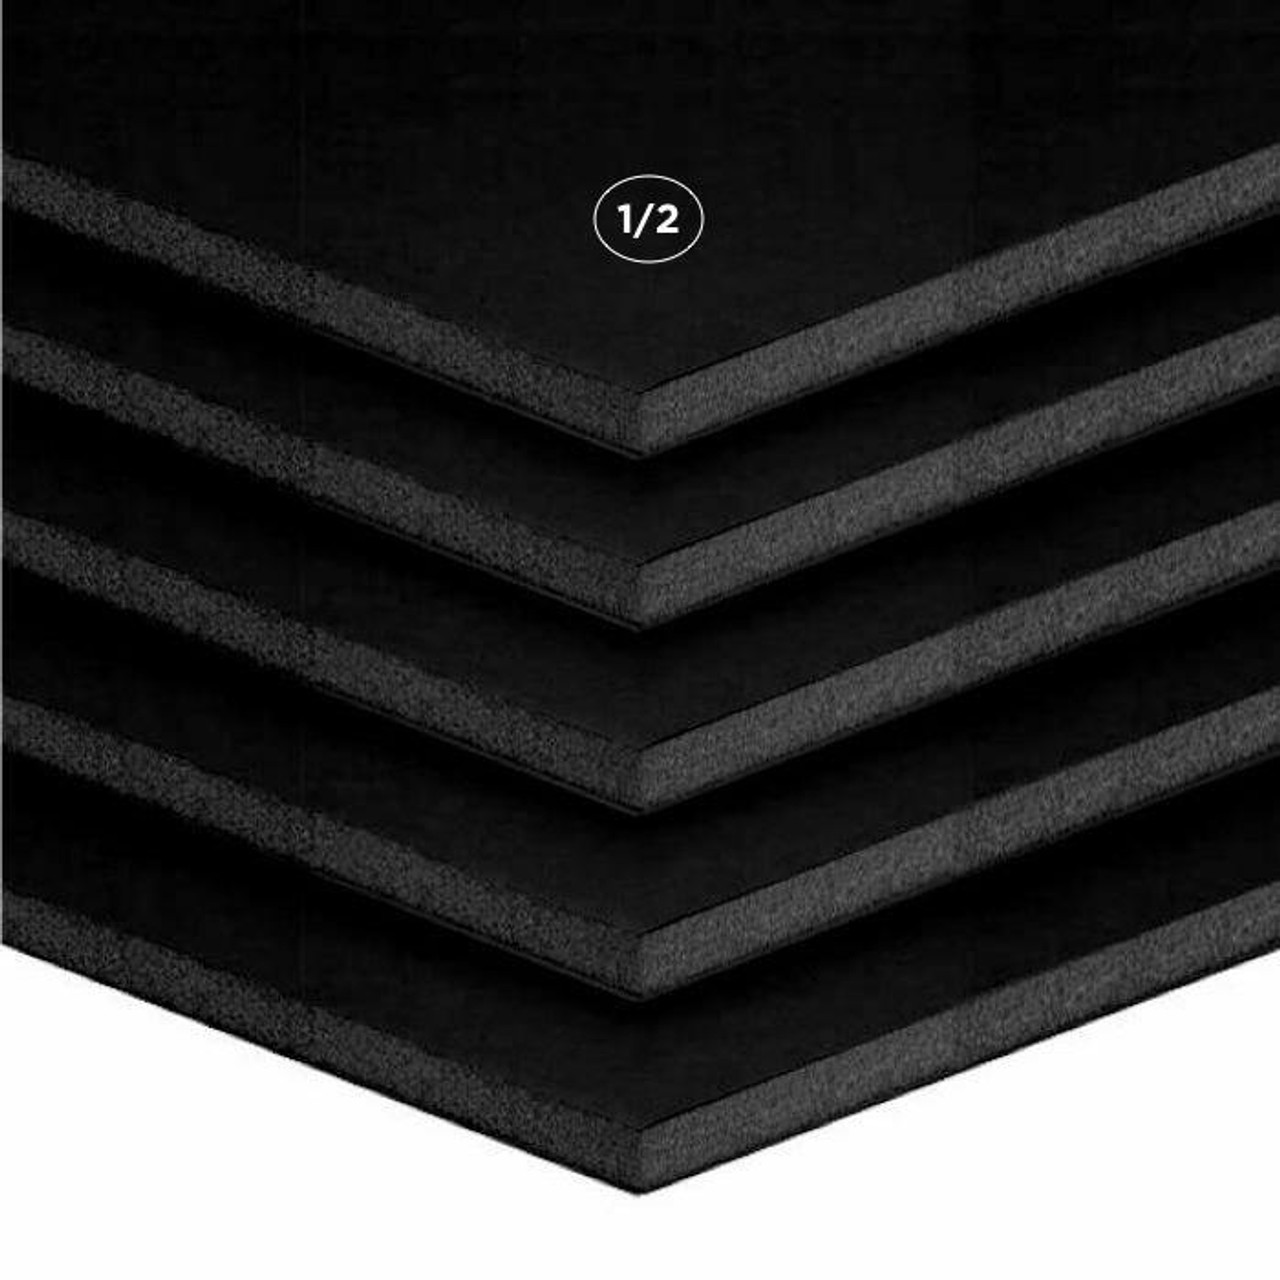 3A Composites 901301 Foamboard Black on Black 1/2 - 30x40